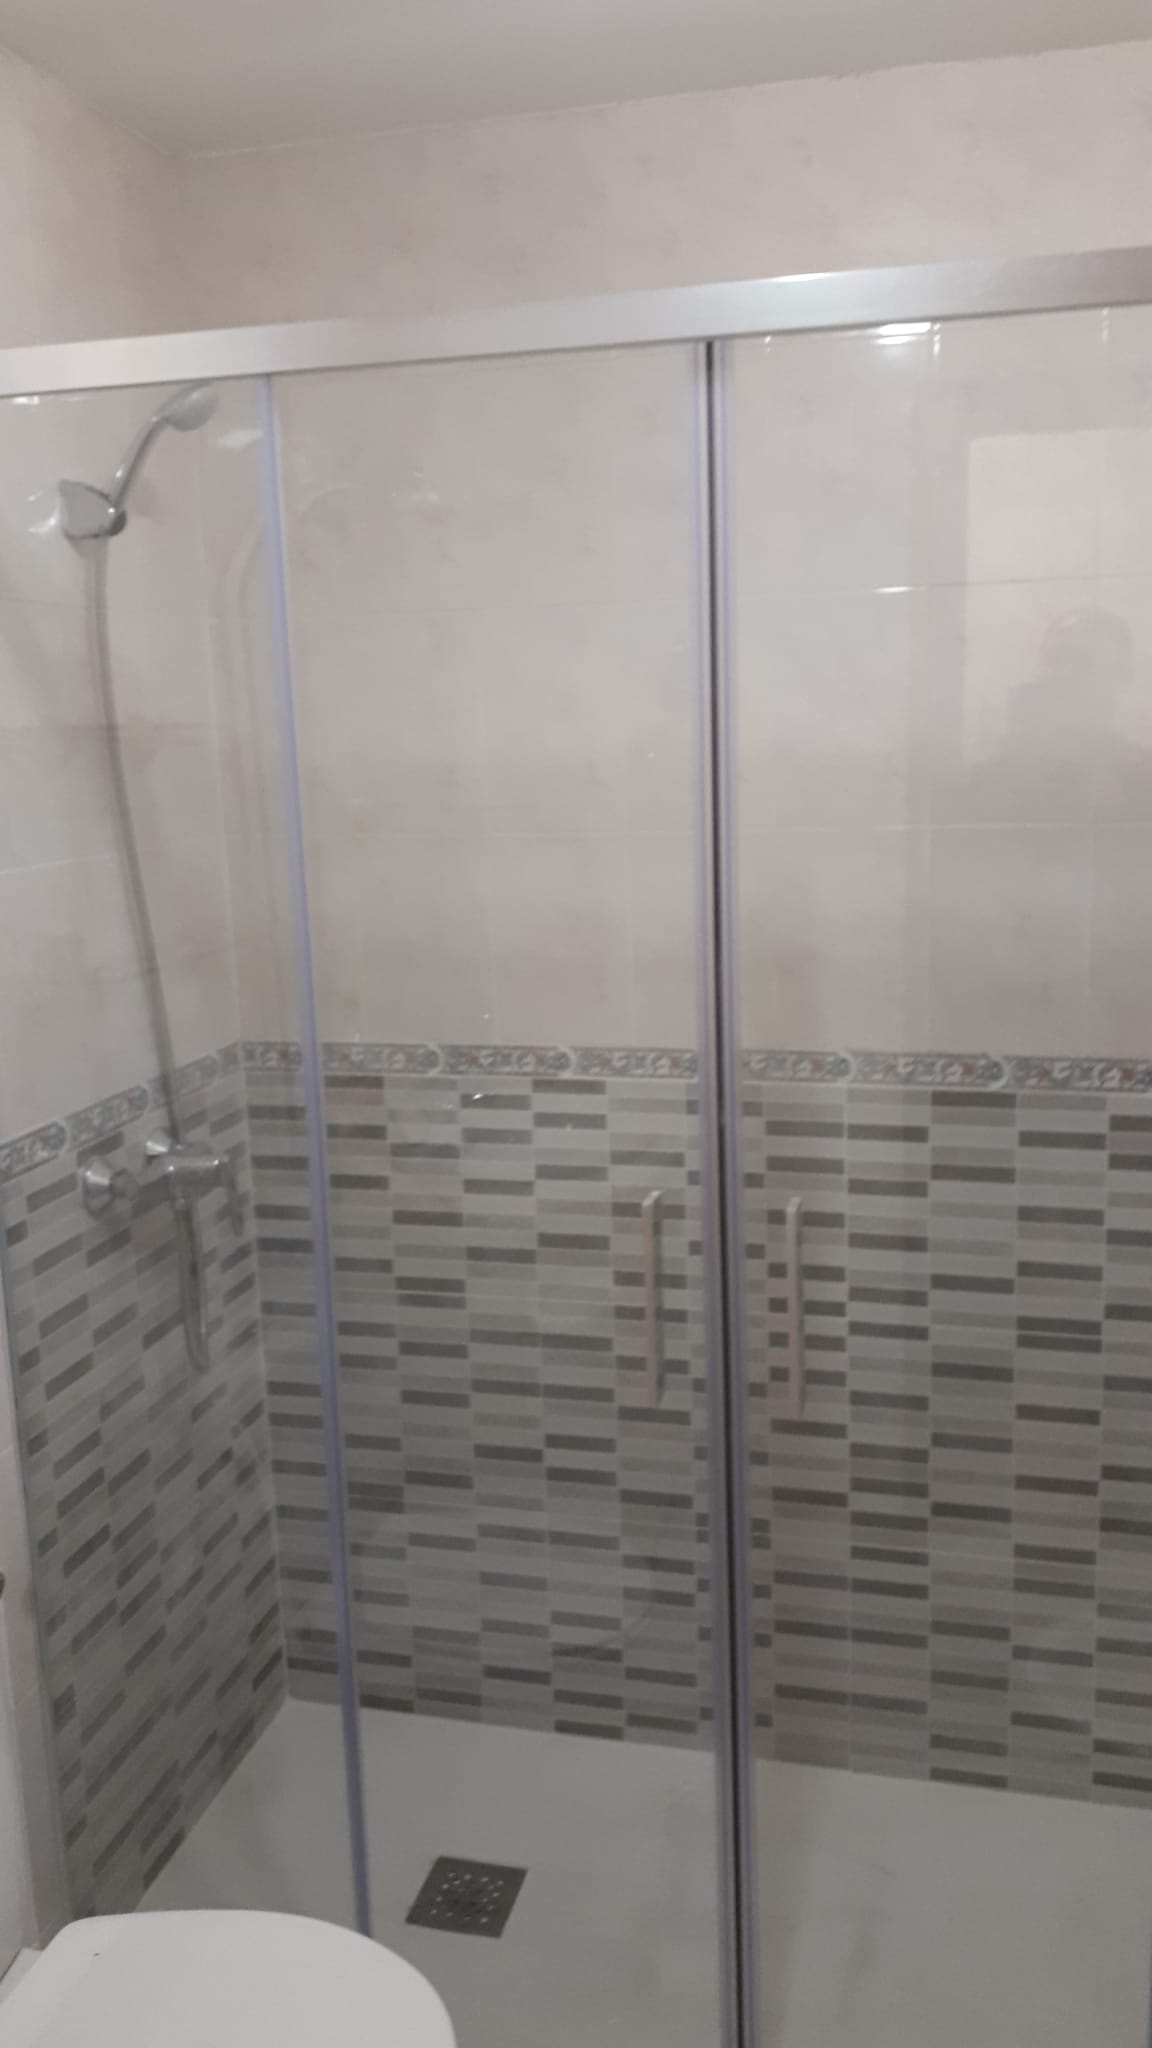 Soltero Oscuro Roca Cambiar bañera por ducha Madrid barato.